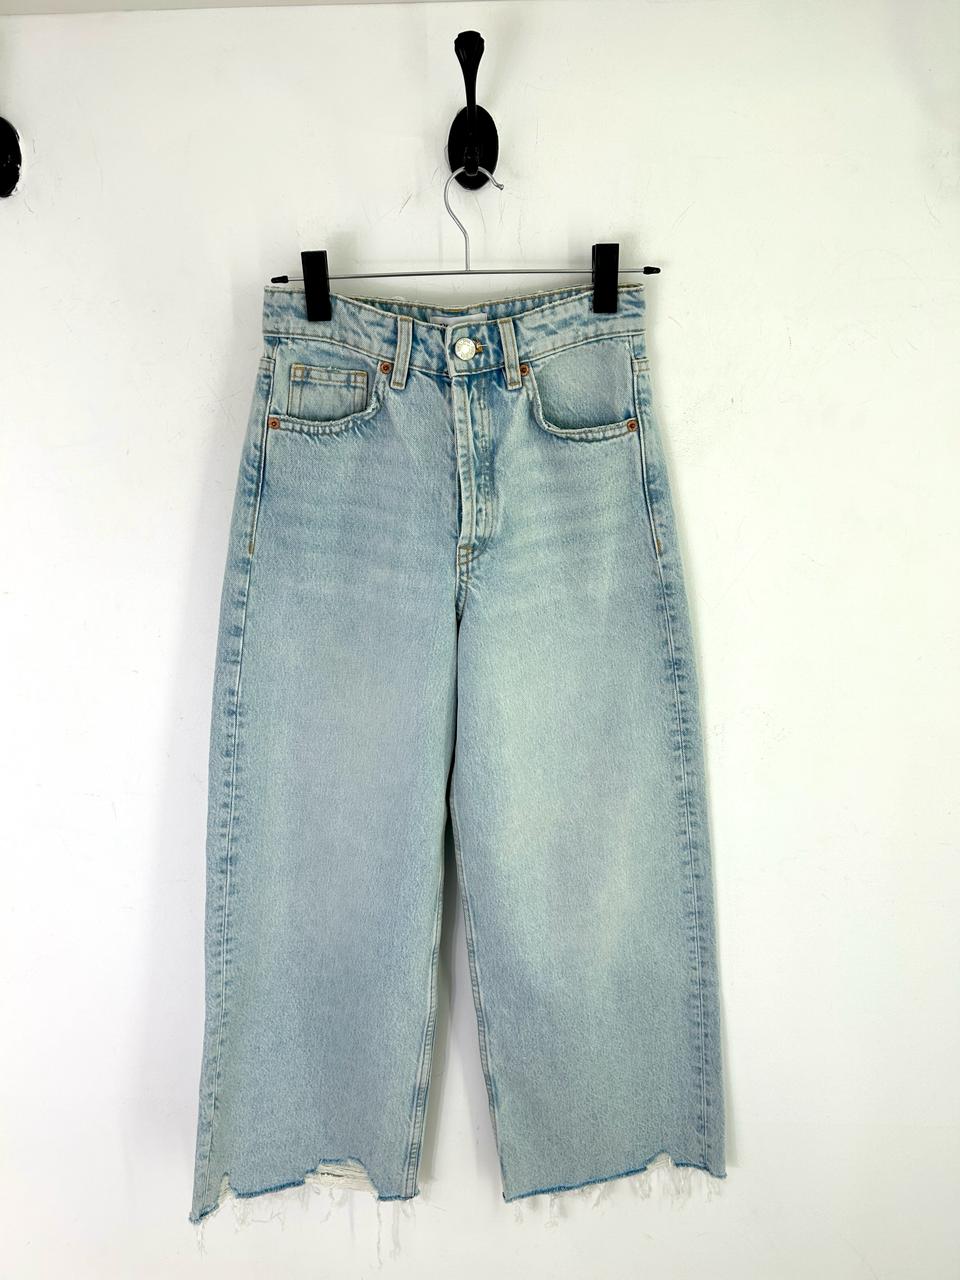 ZARA Calça jeans azul claro 34 - Second Hand / Brecho